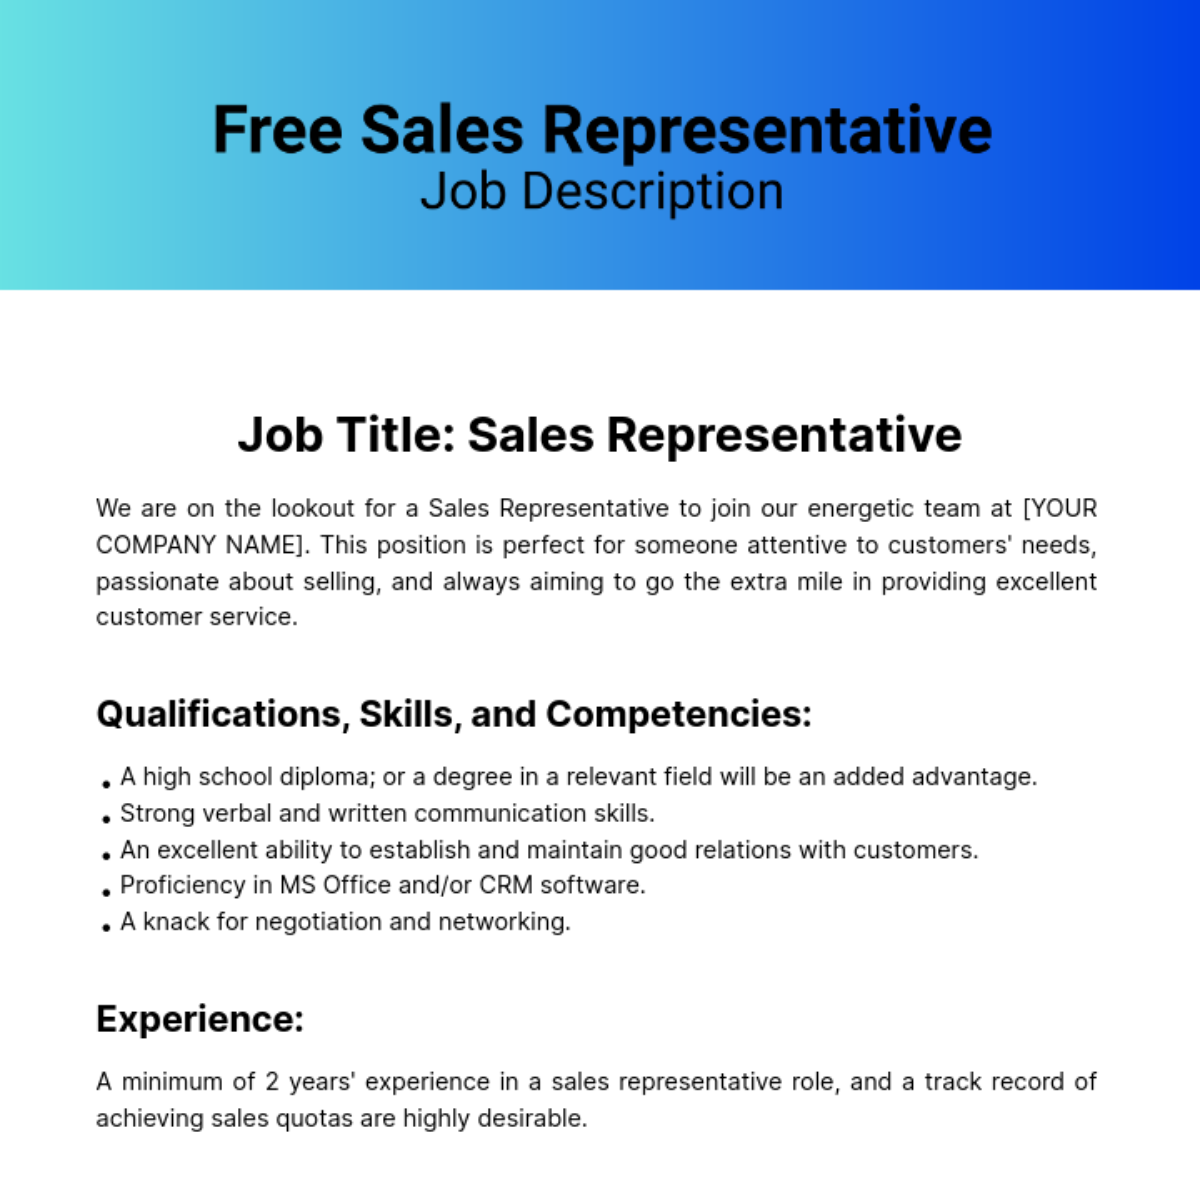 Free Sales Representative Duties and Responsibilities Template